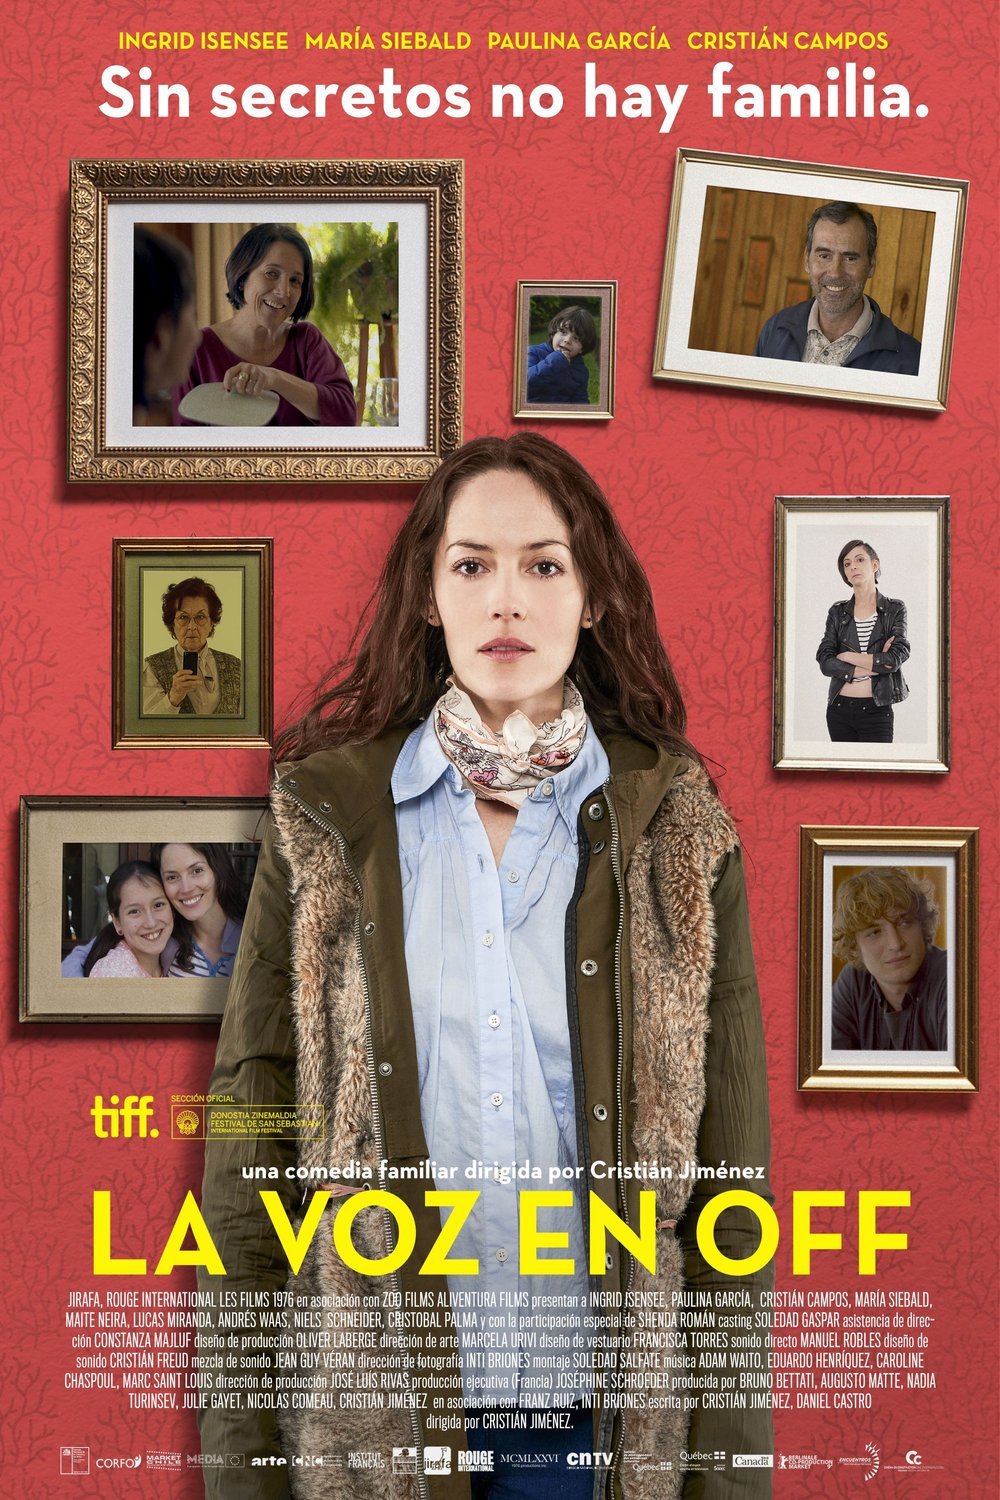 Spanish poster of the movie La Voz en off